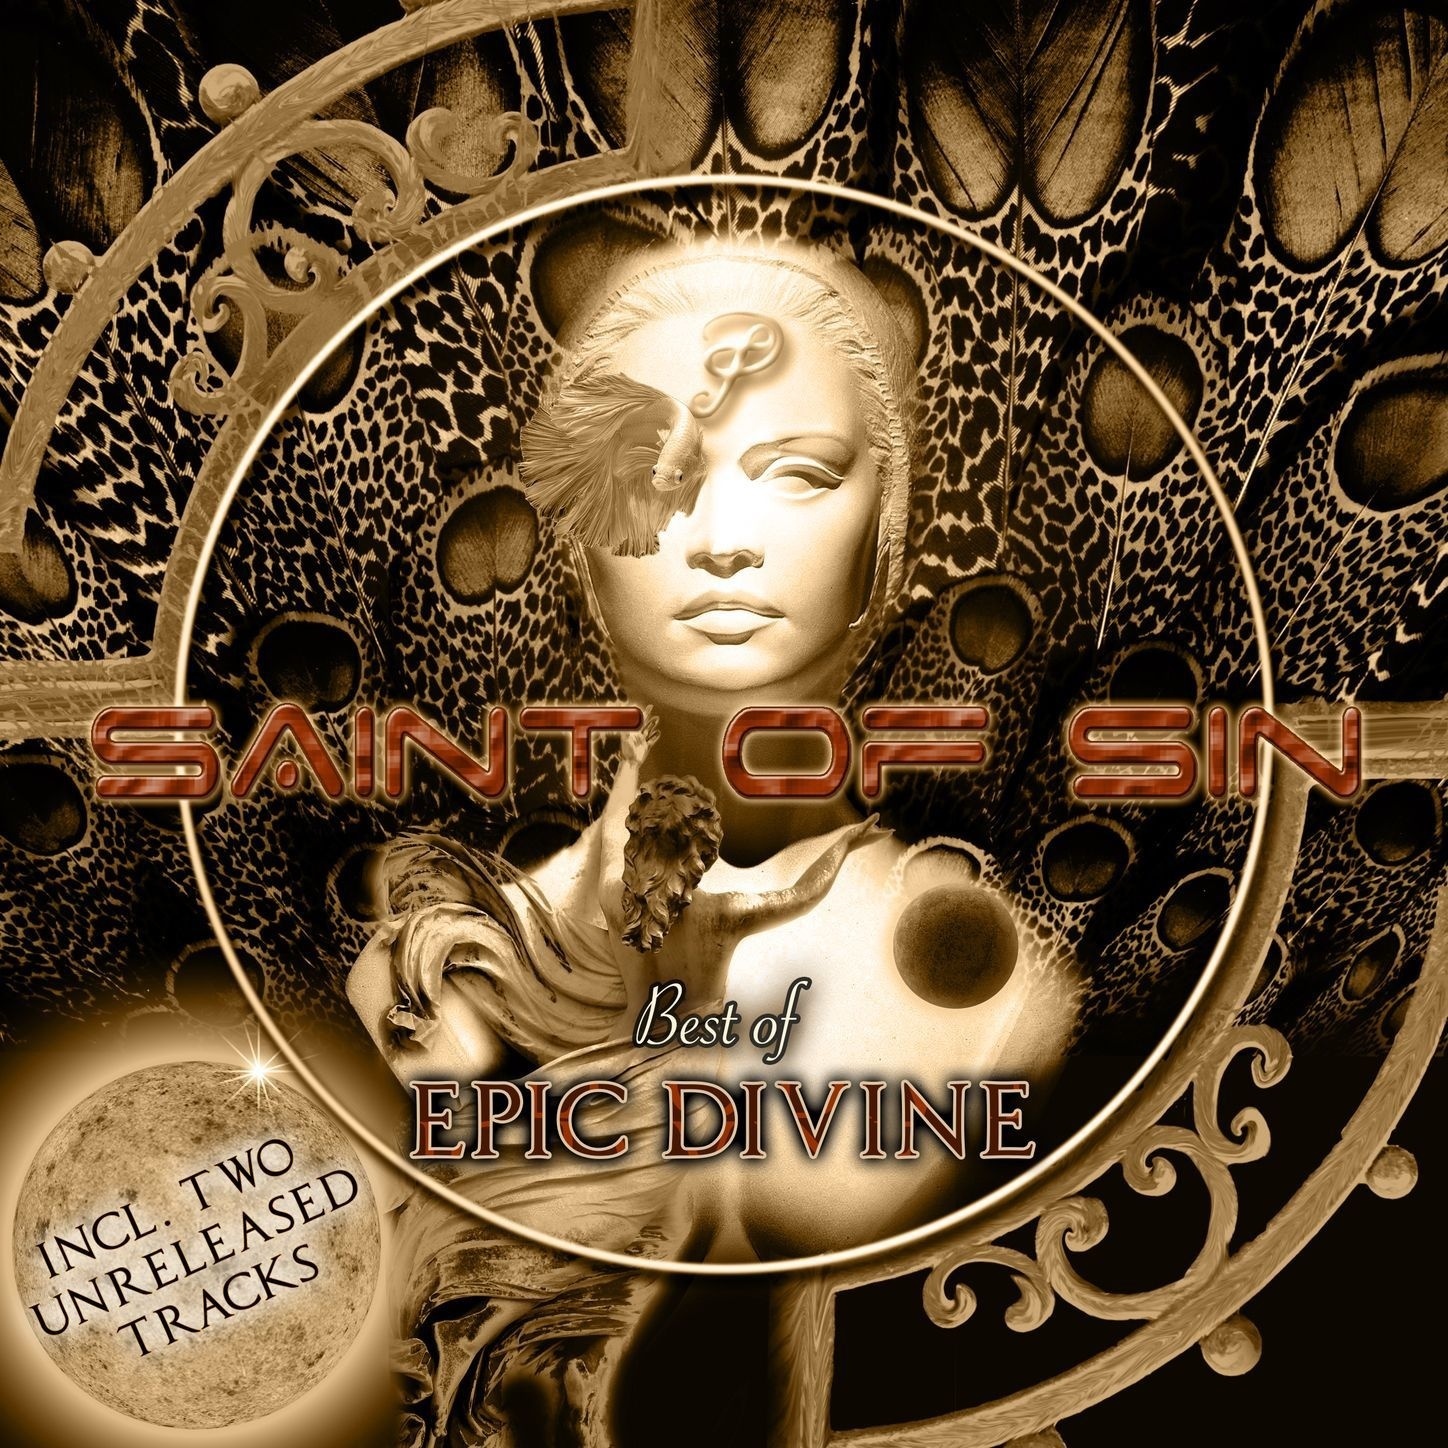 The Best of Epic Divine (Continuous Mix)